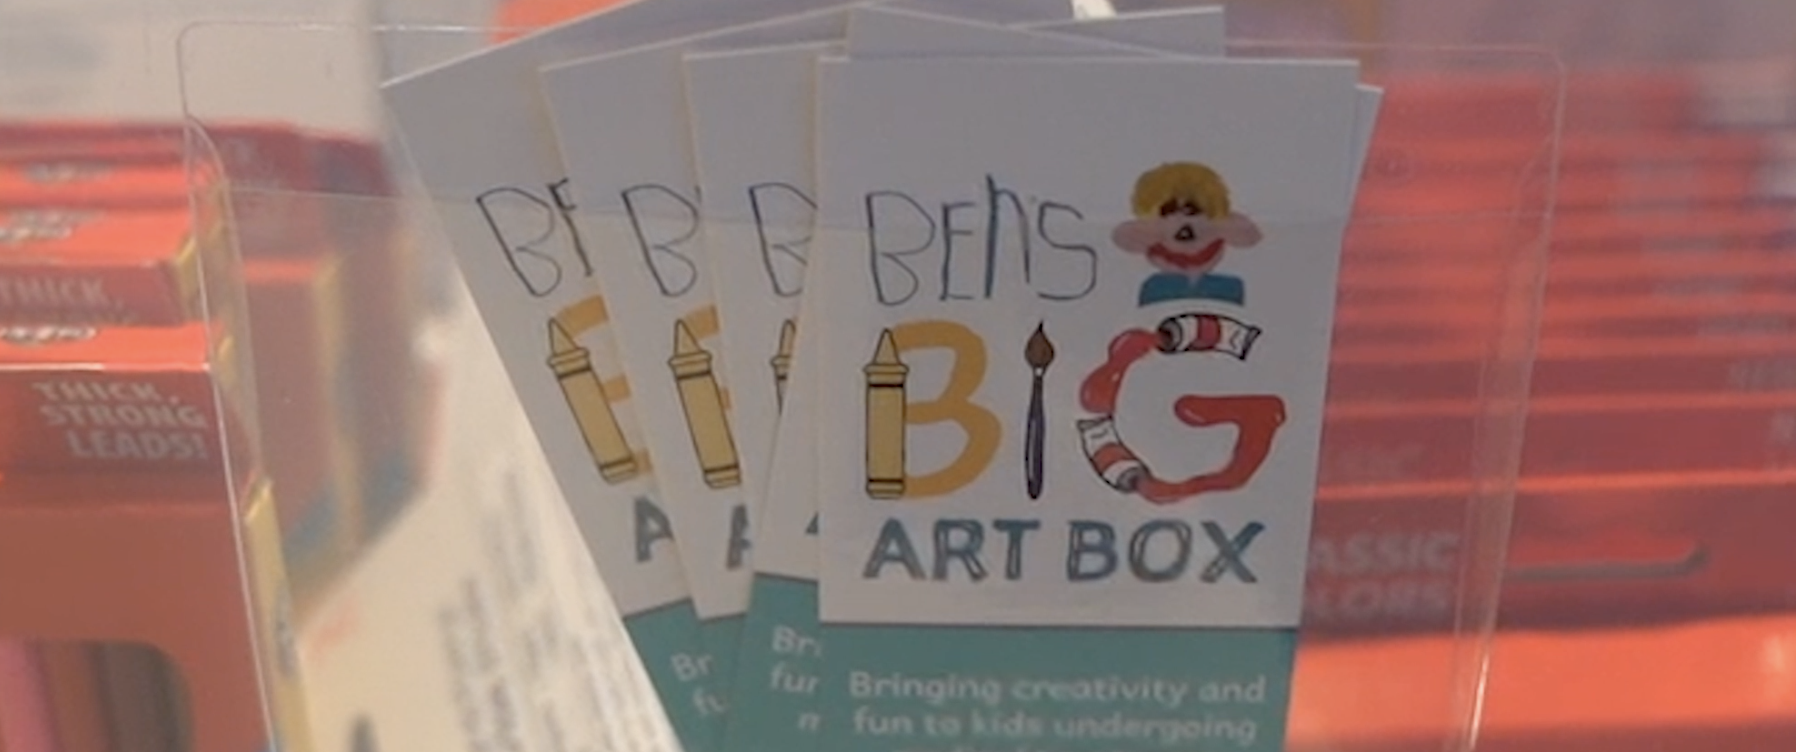 Big Ben's Art Box logo. 